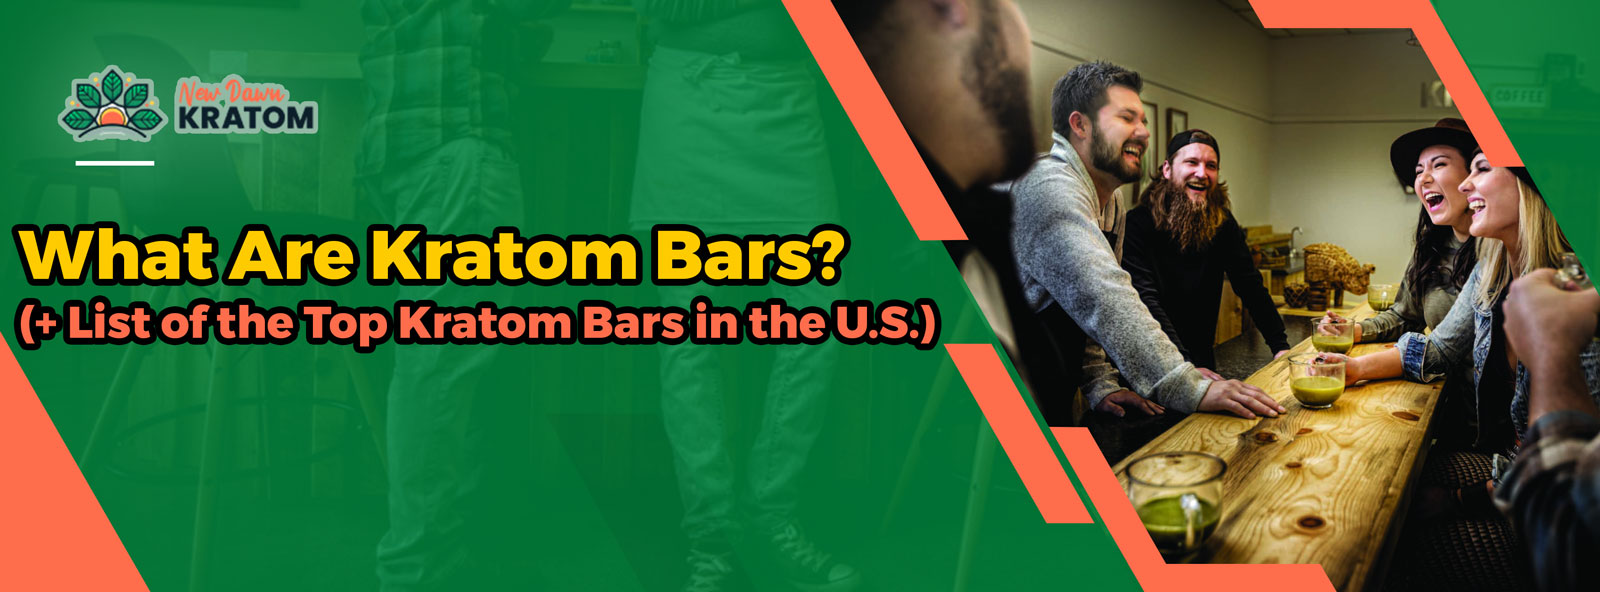 what are kratom bars? (+ list of the top kratom bars in the u.s.)